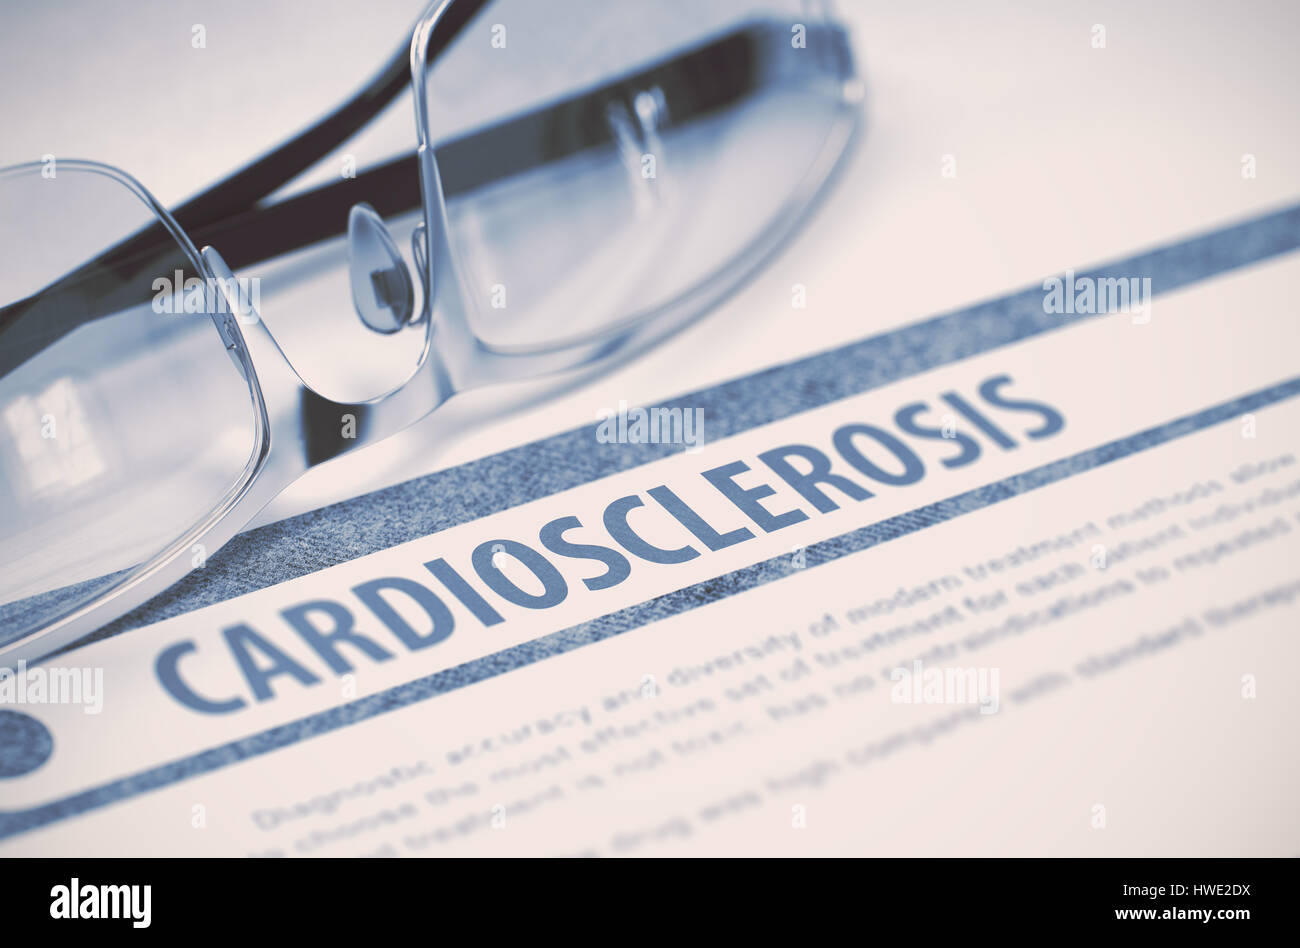 Cardiosclerosis. Medicine. 3D Illustration. Stock Photo